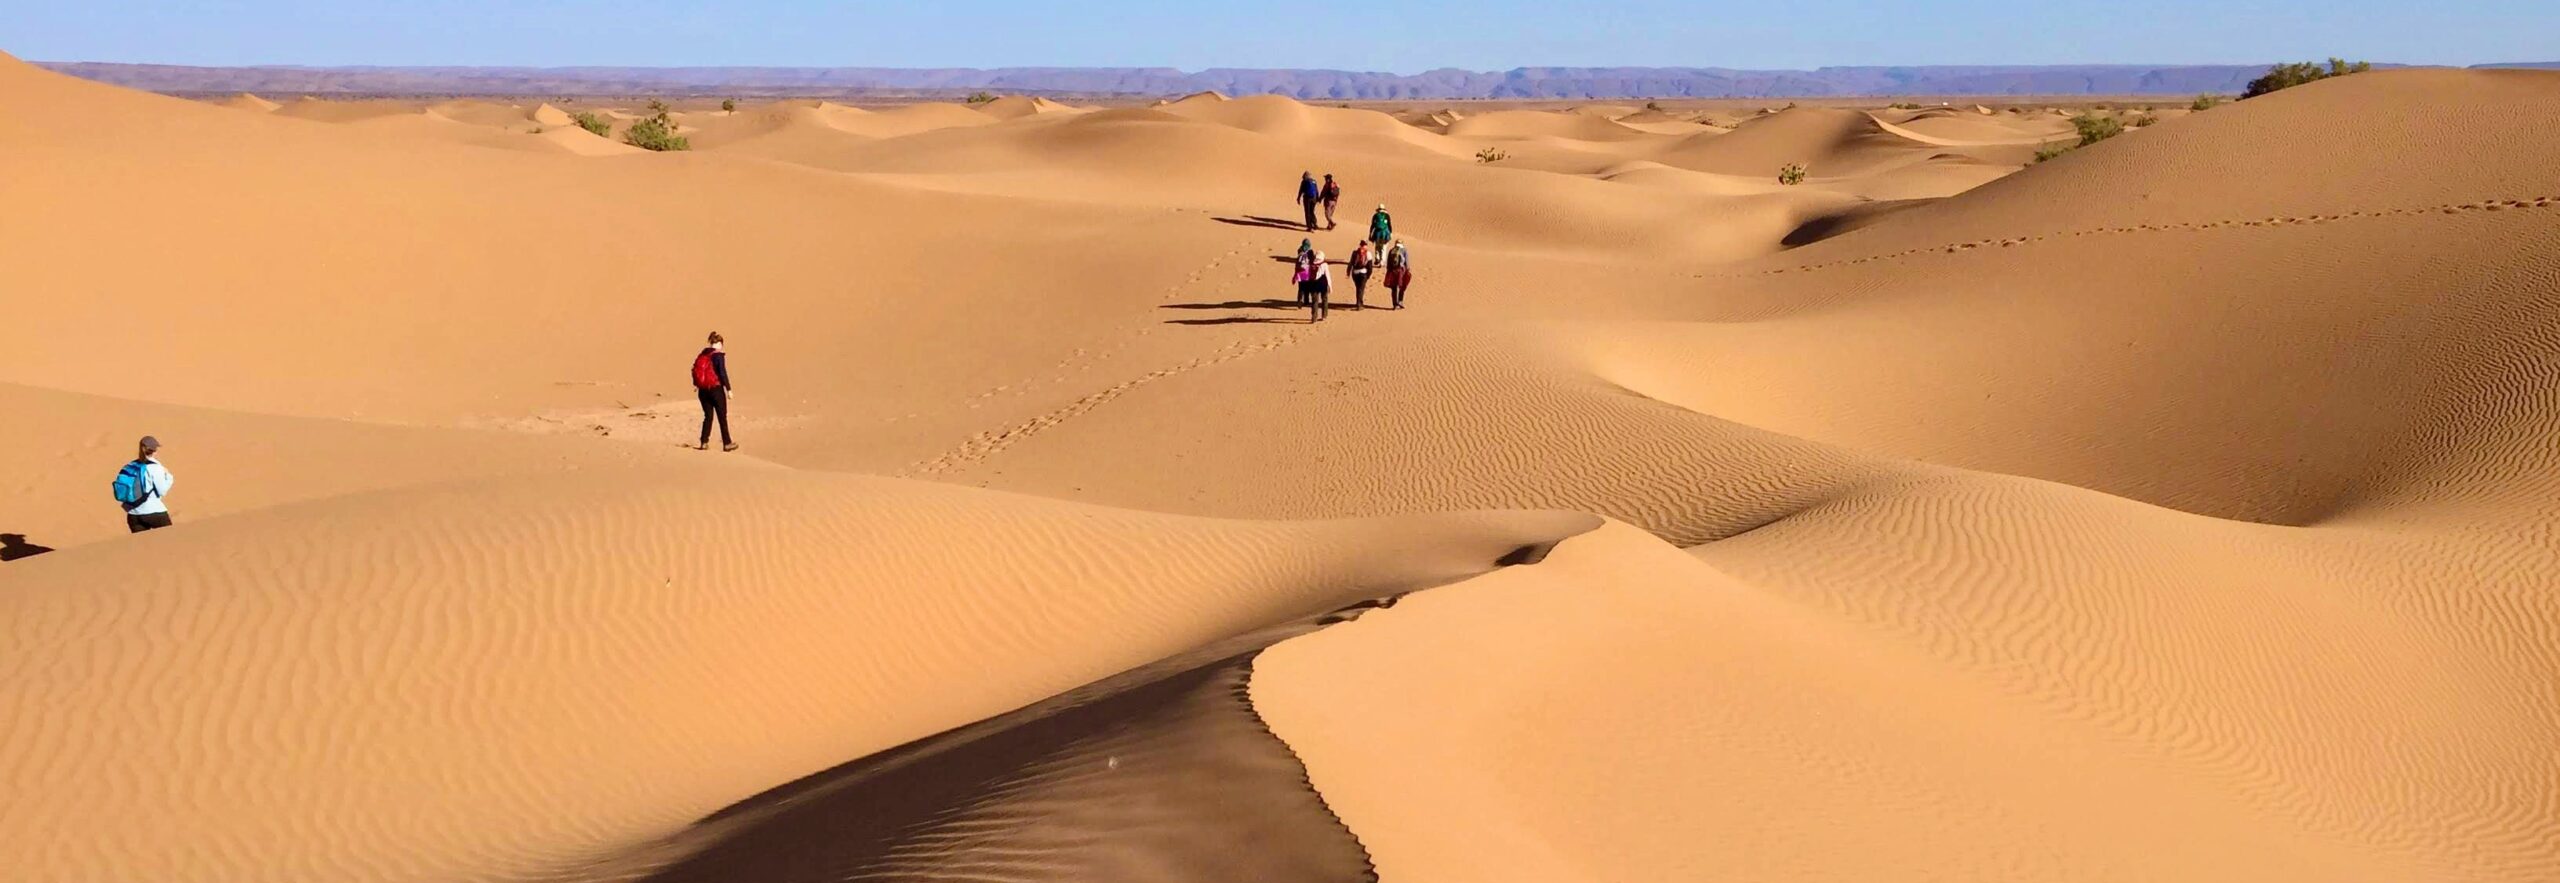 Wandelen in Stilte Woestijn Marokko